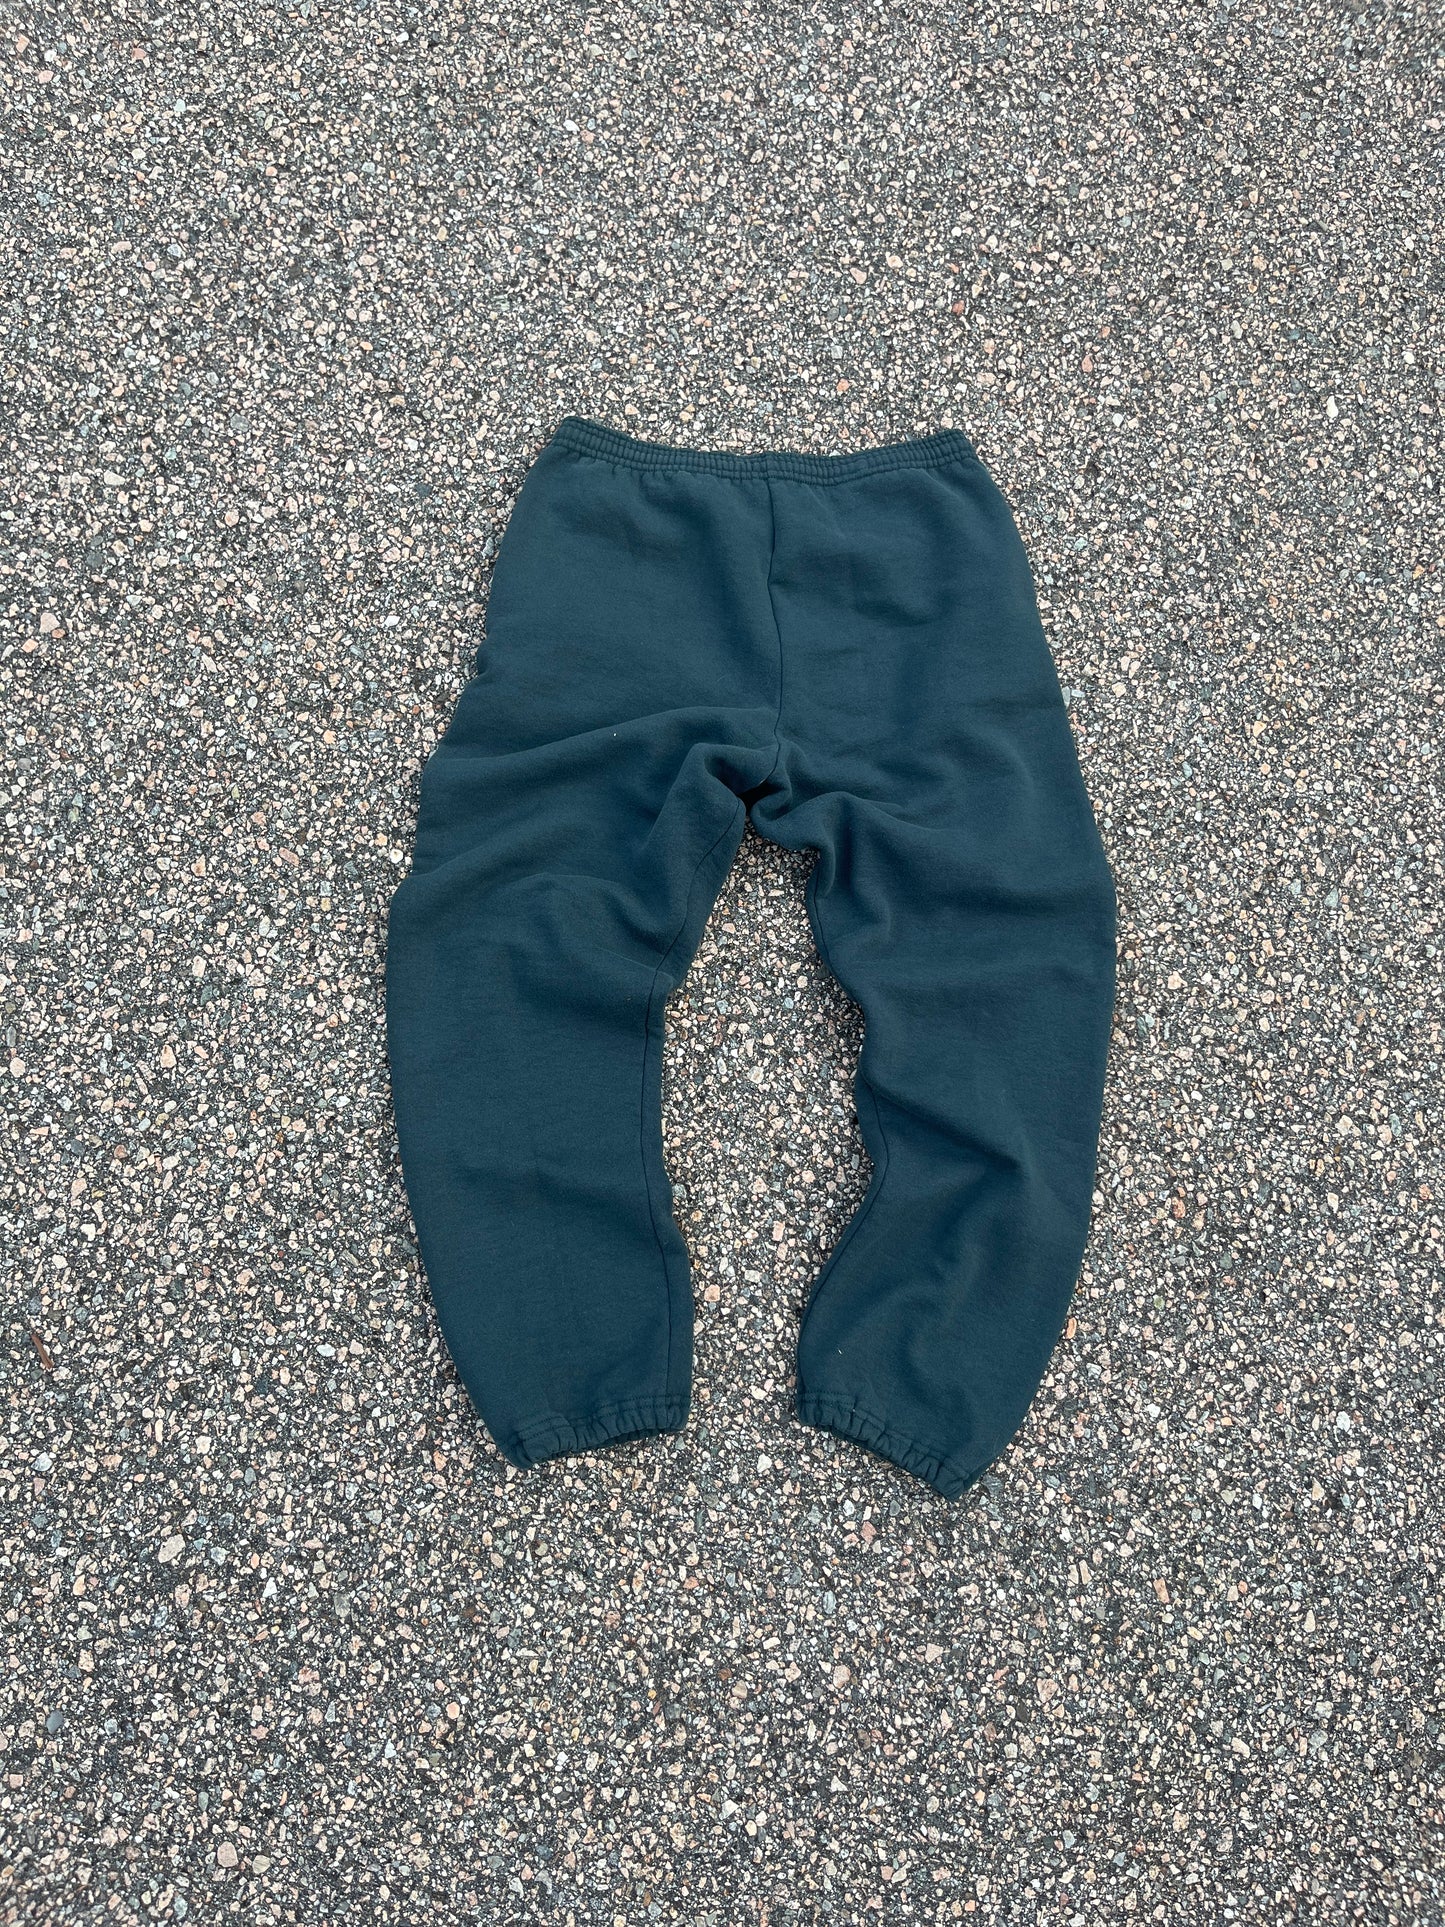 90’s Faded Hunter Green Russell Sweatpants - Medium